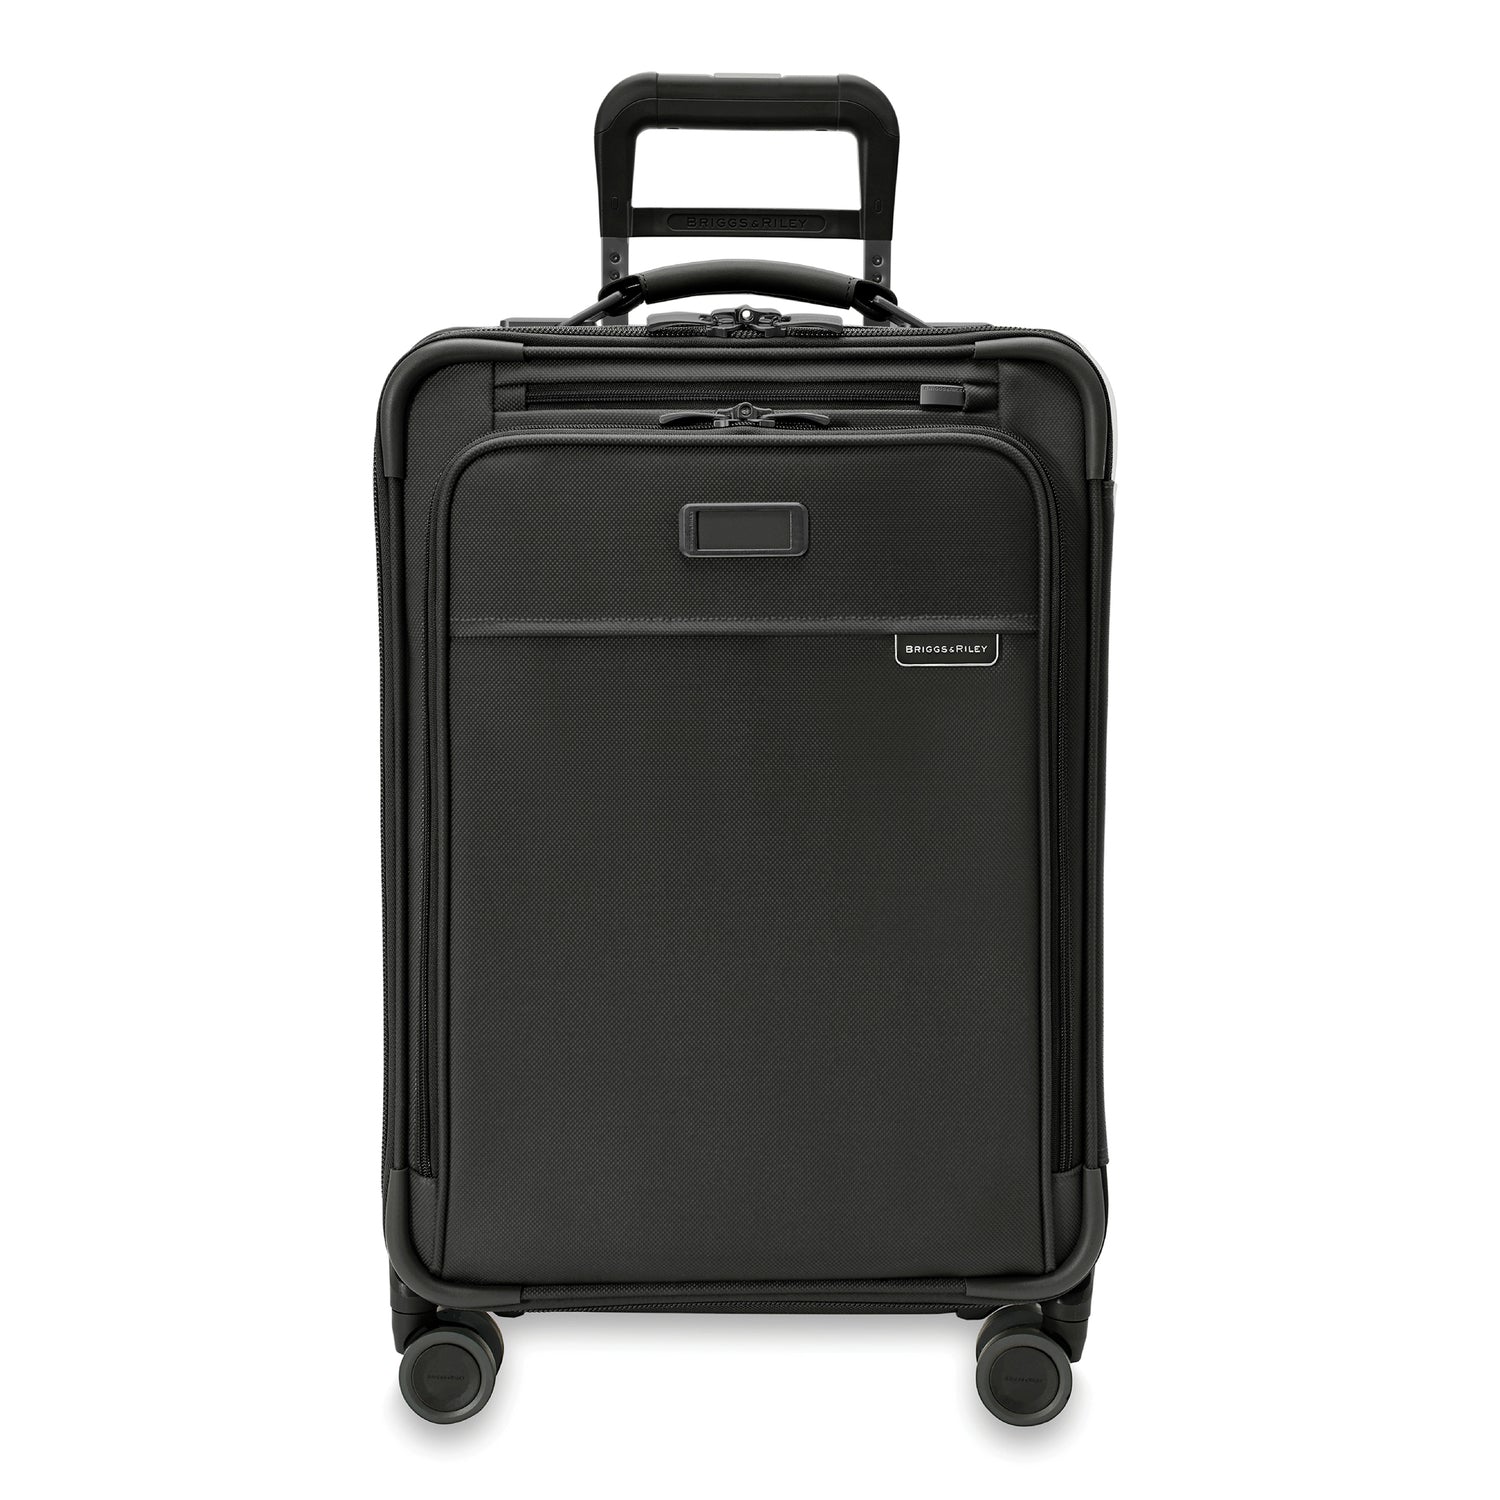 Large luggage l light black Online Store